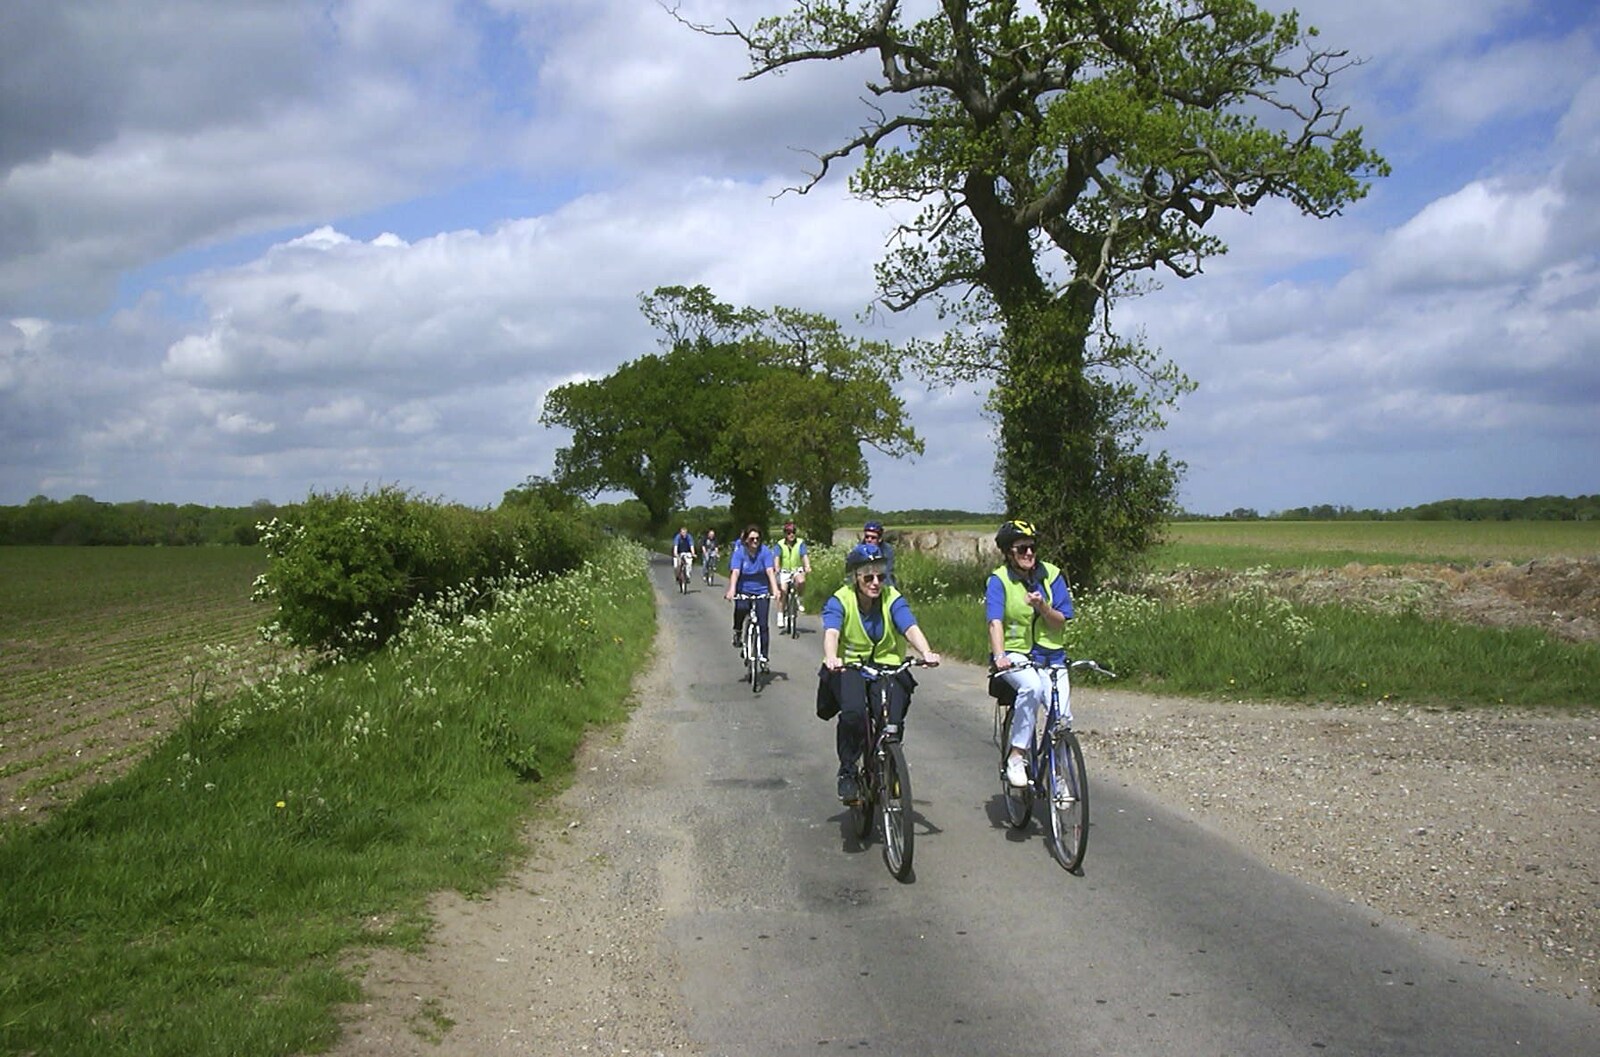 The BSCC Bike Ride Weekend, Kelling, Norfolk - 9th May 2003: Cycling in the Norfolk lanes